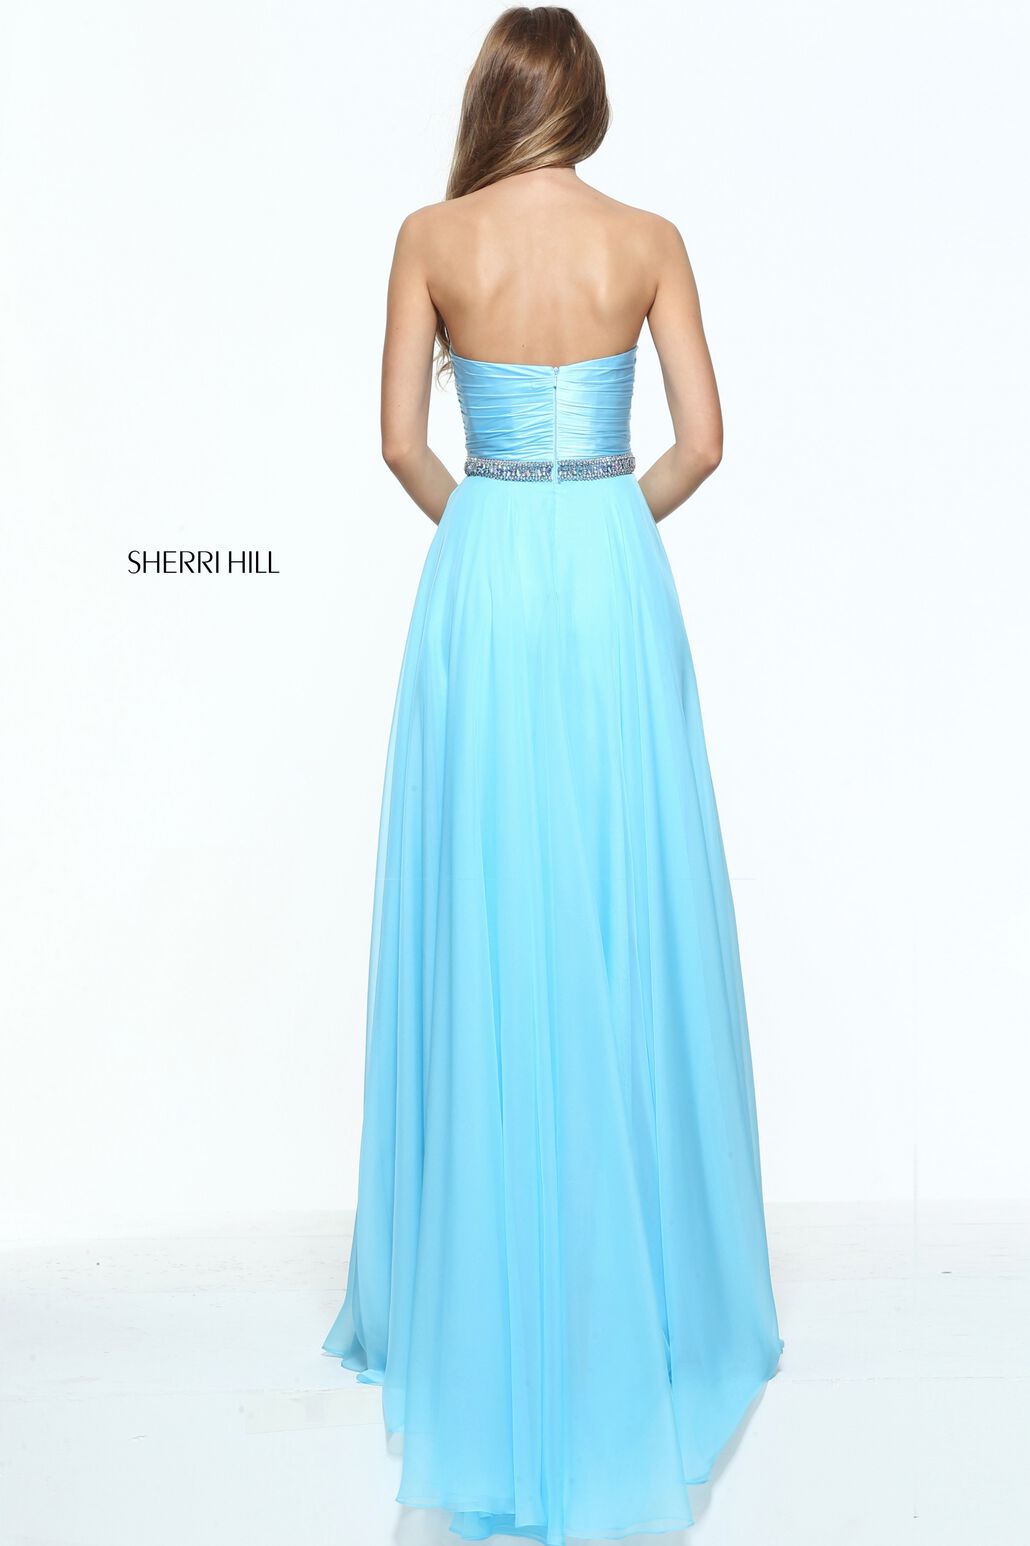 Buy dress style № 51002 designed by SherriHill